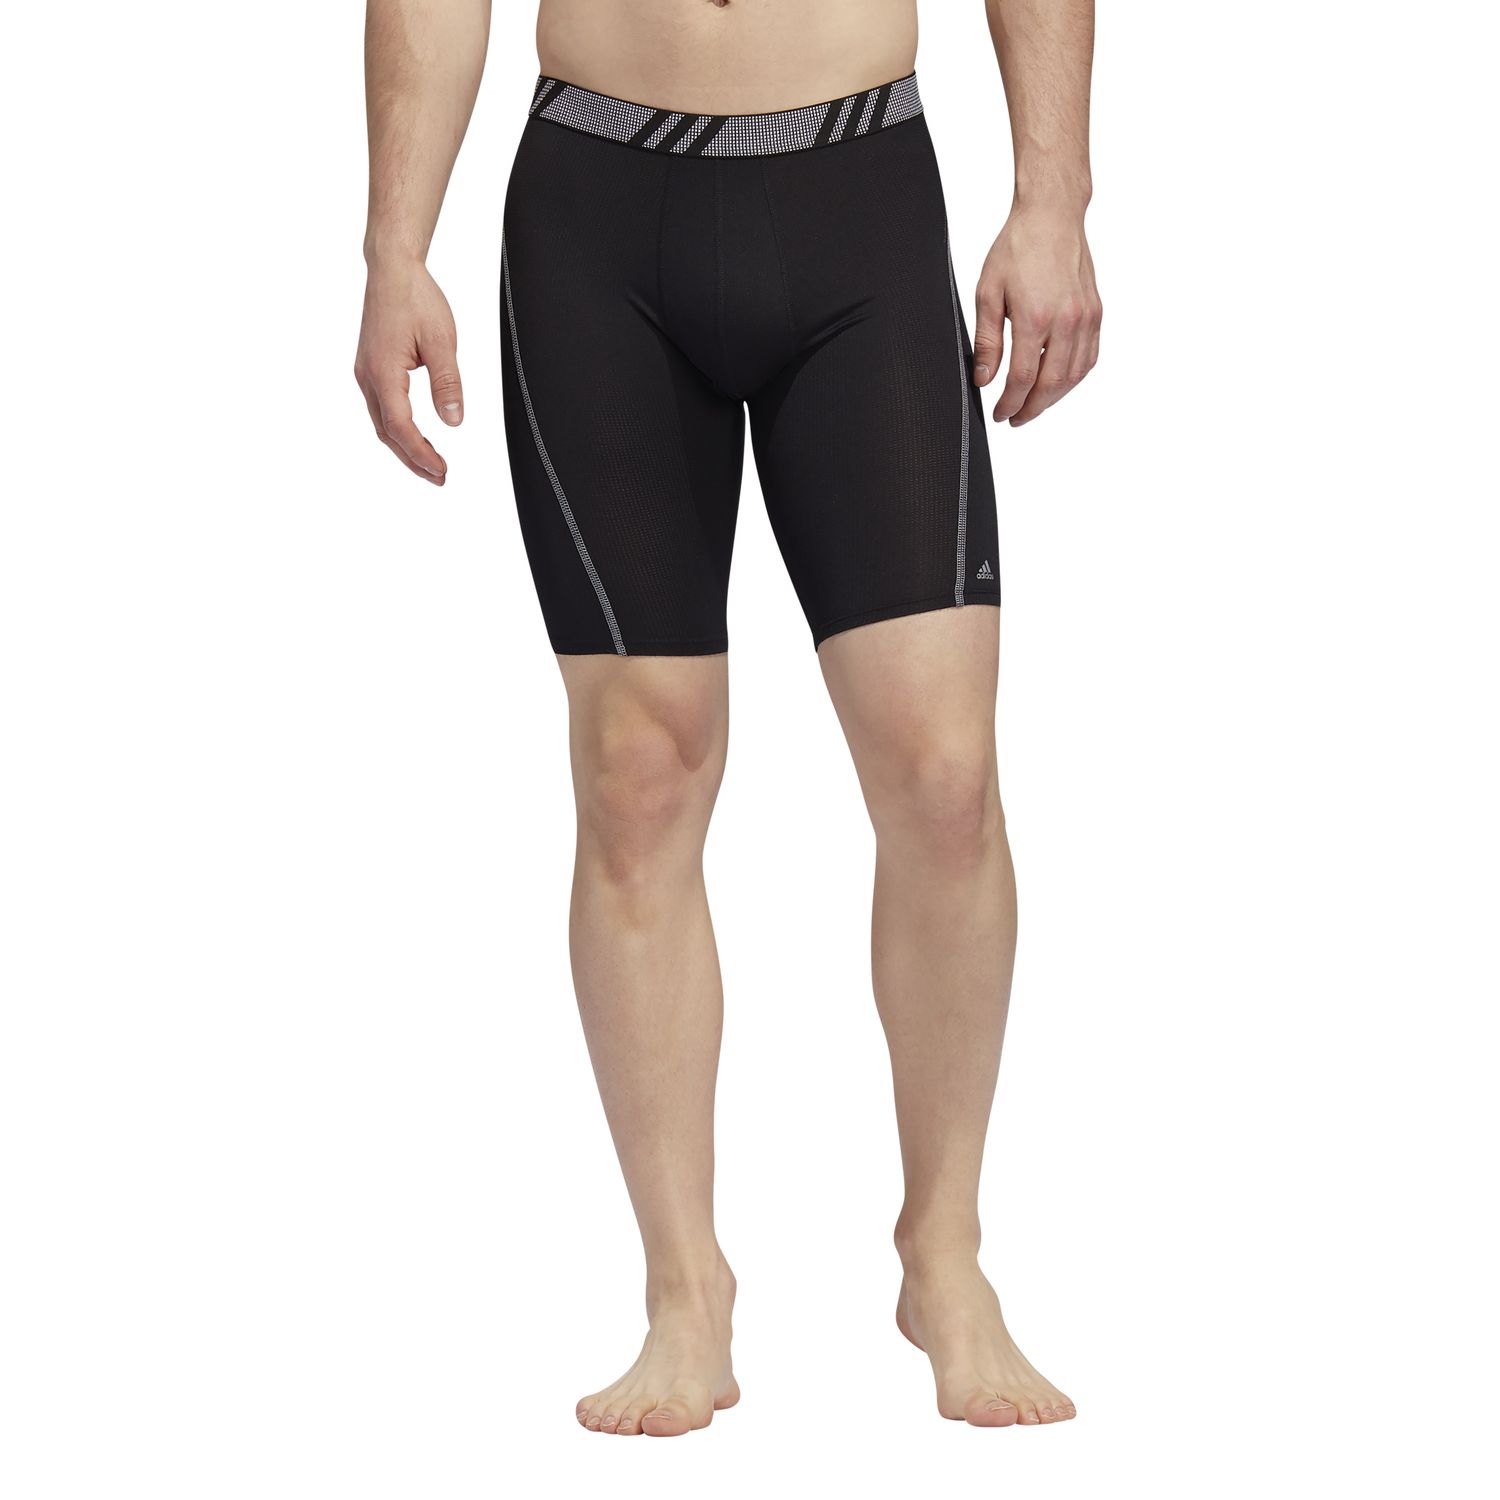 adidas men's sport performance climacool 9 inch midway underwear